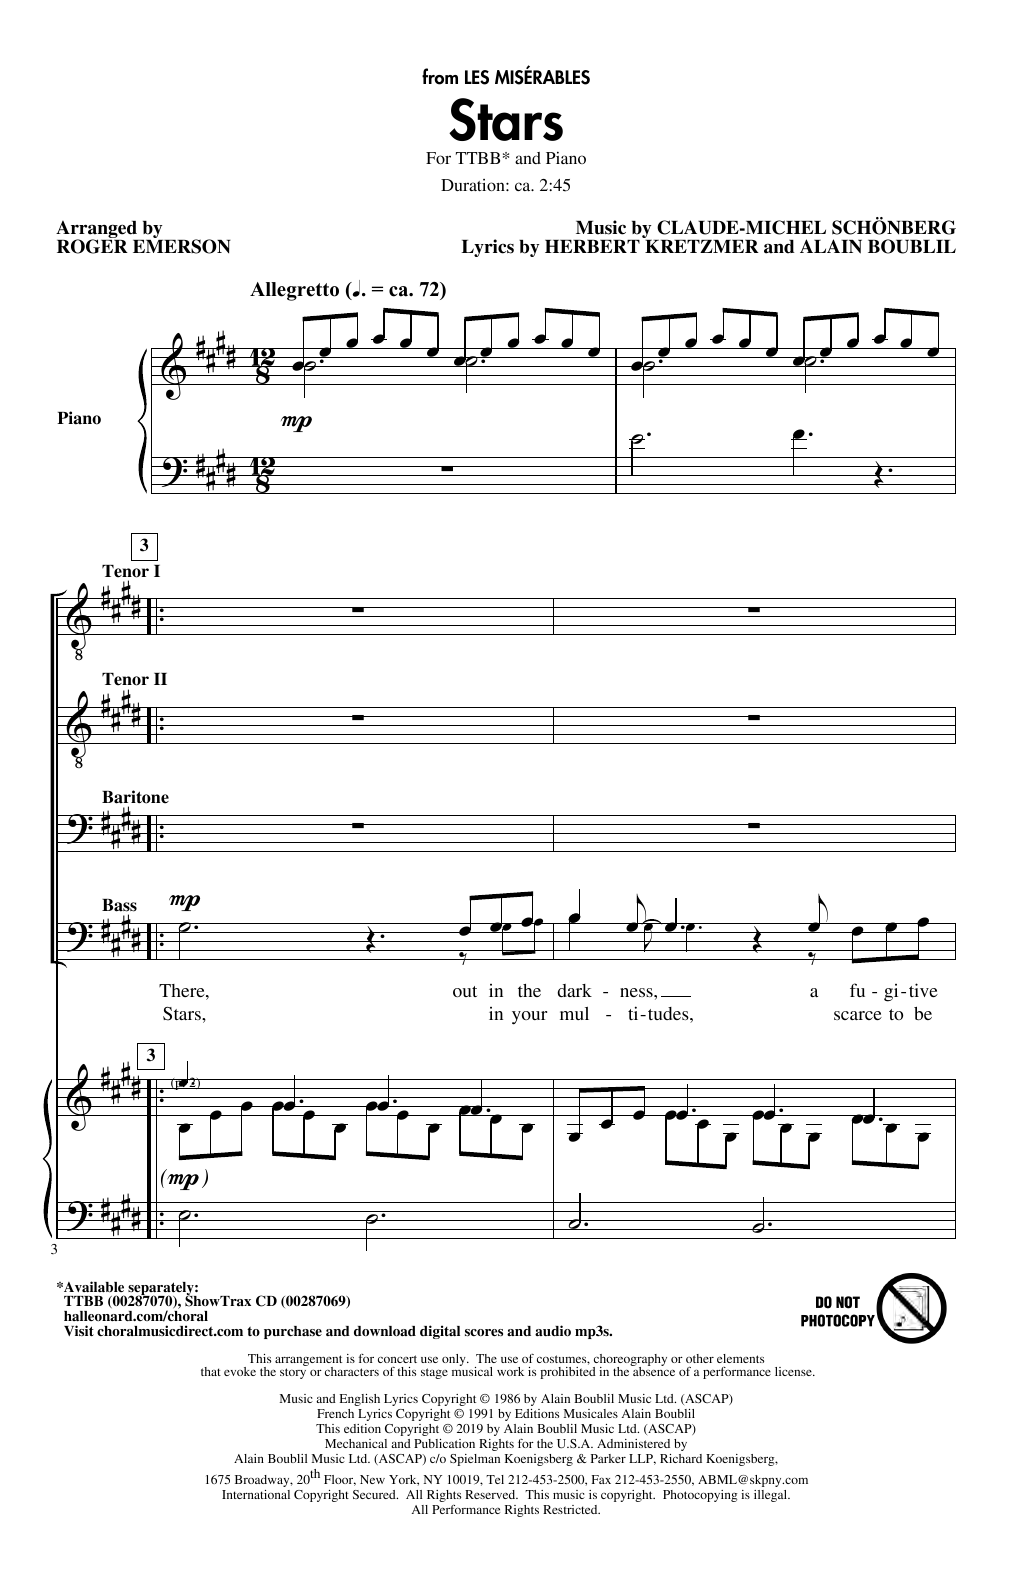 Boublil & Schonberg Stars (from Les Miserables) (arr. Roger Emerson) Sheet Music Notes & Chords for TTBB Choir - Download or Print PDF